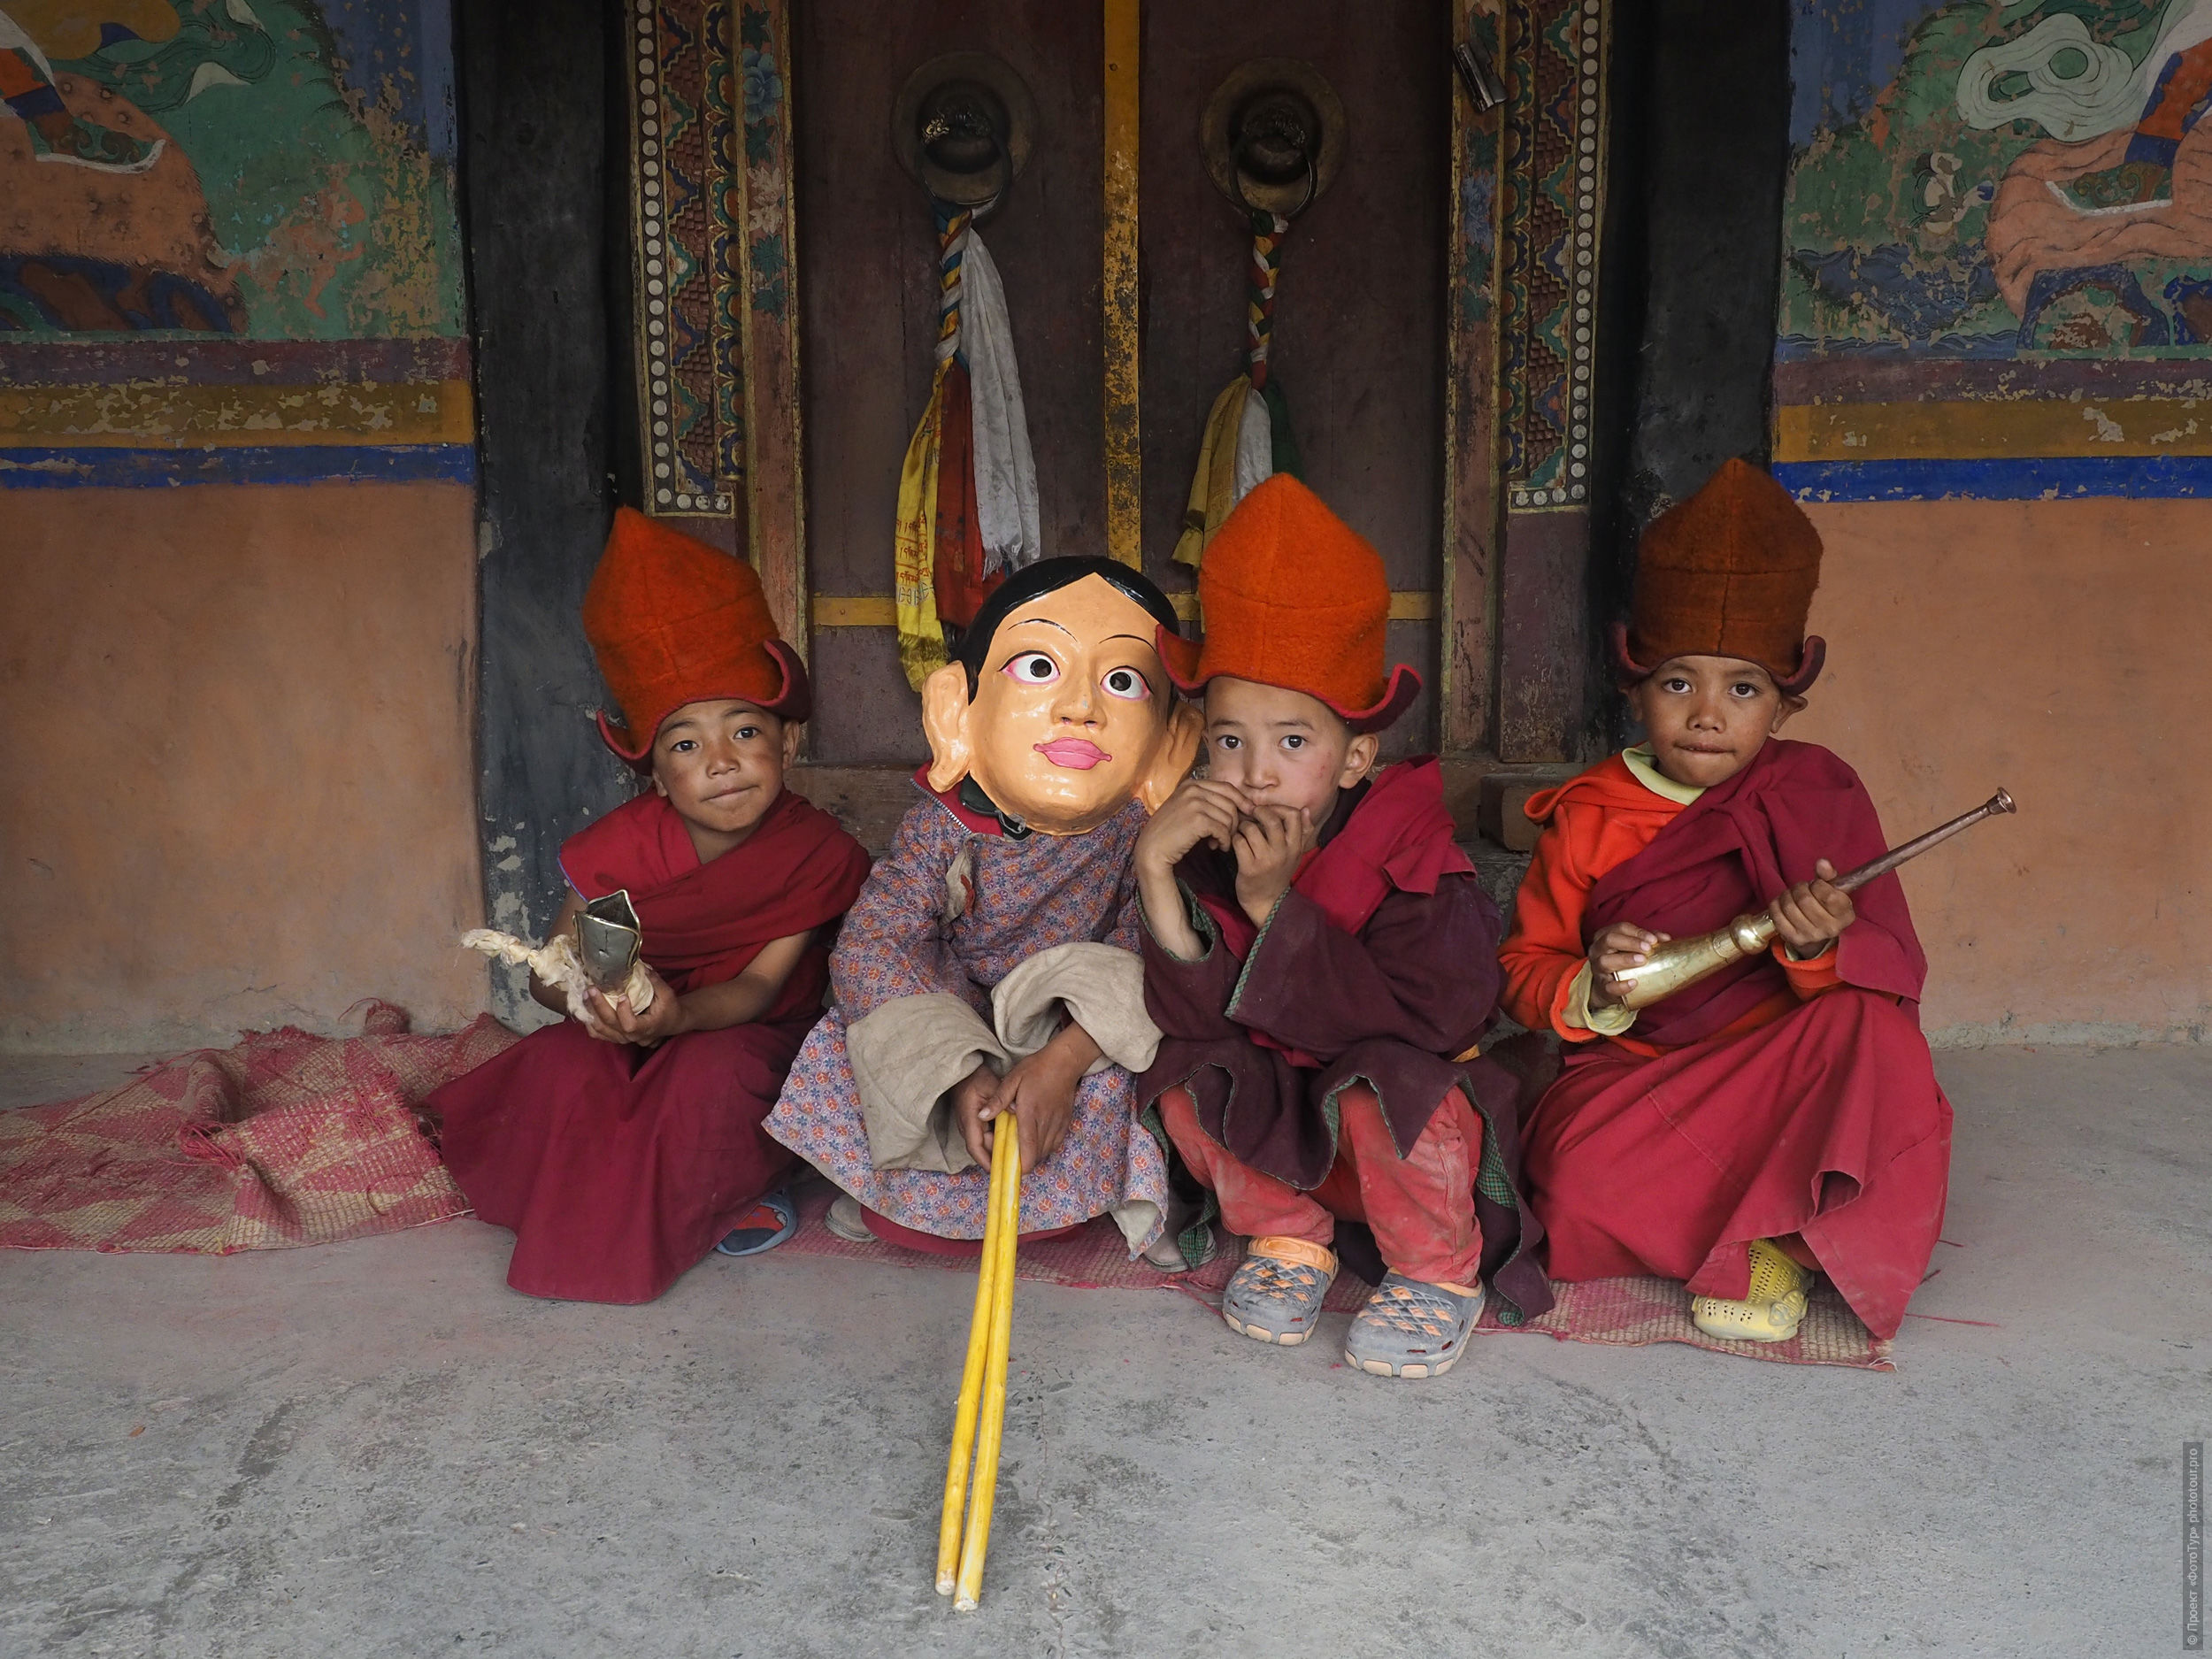  Буддийская мистерия Стонджей Густор, монастырь Стонгей Гонпа. Stongde Gustor Festival.